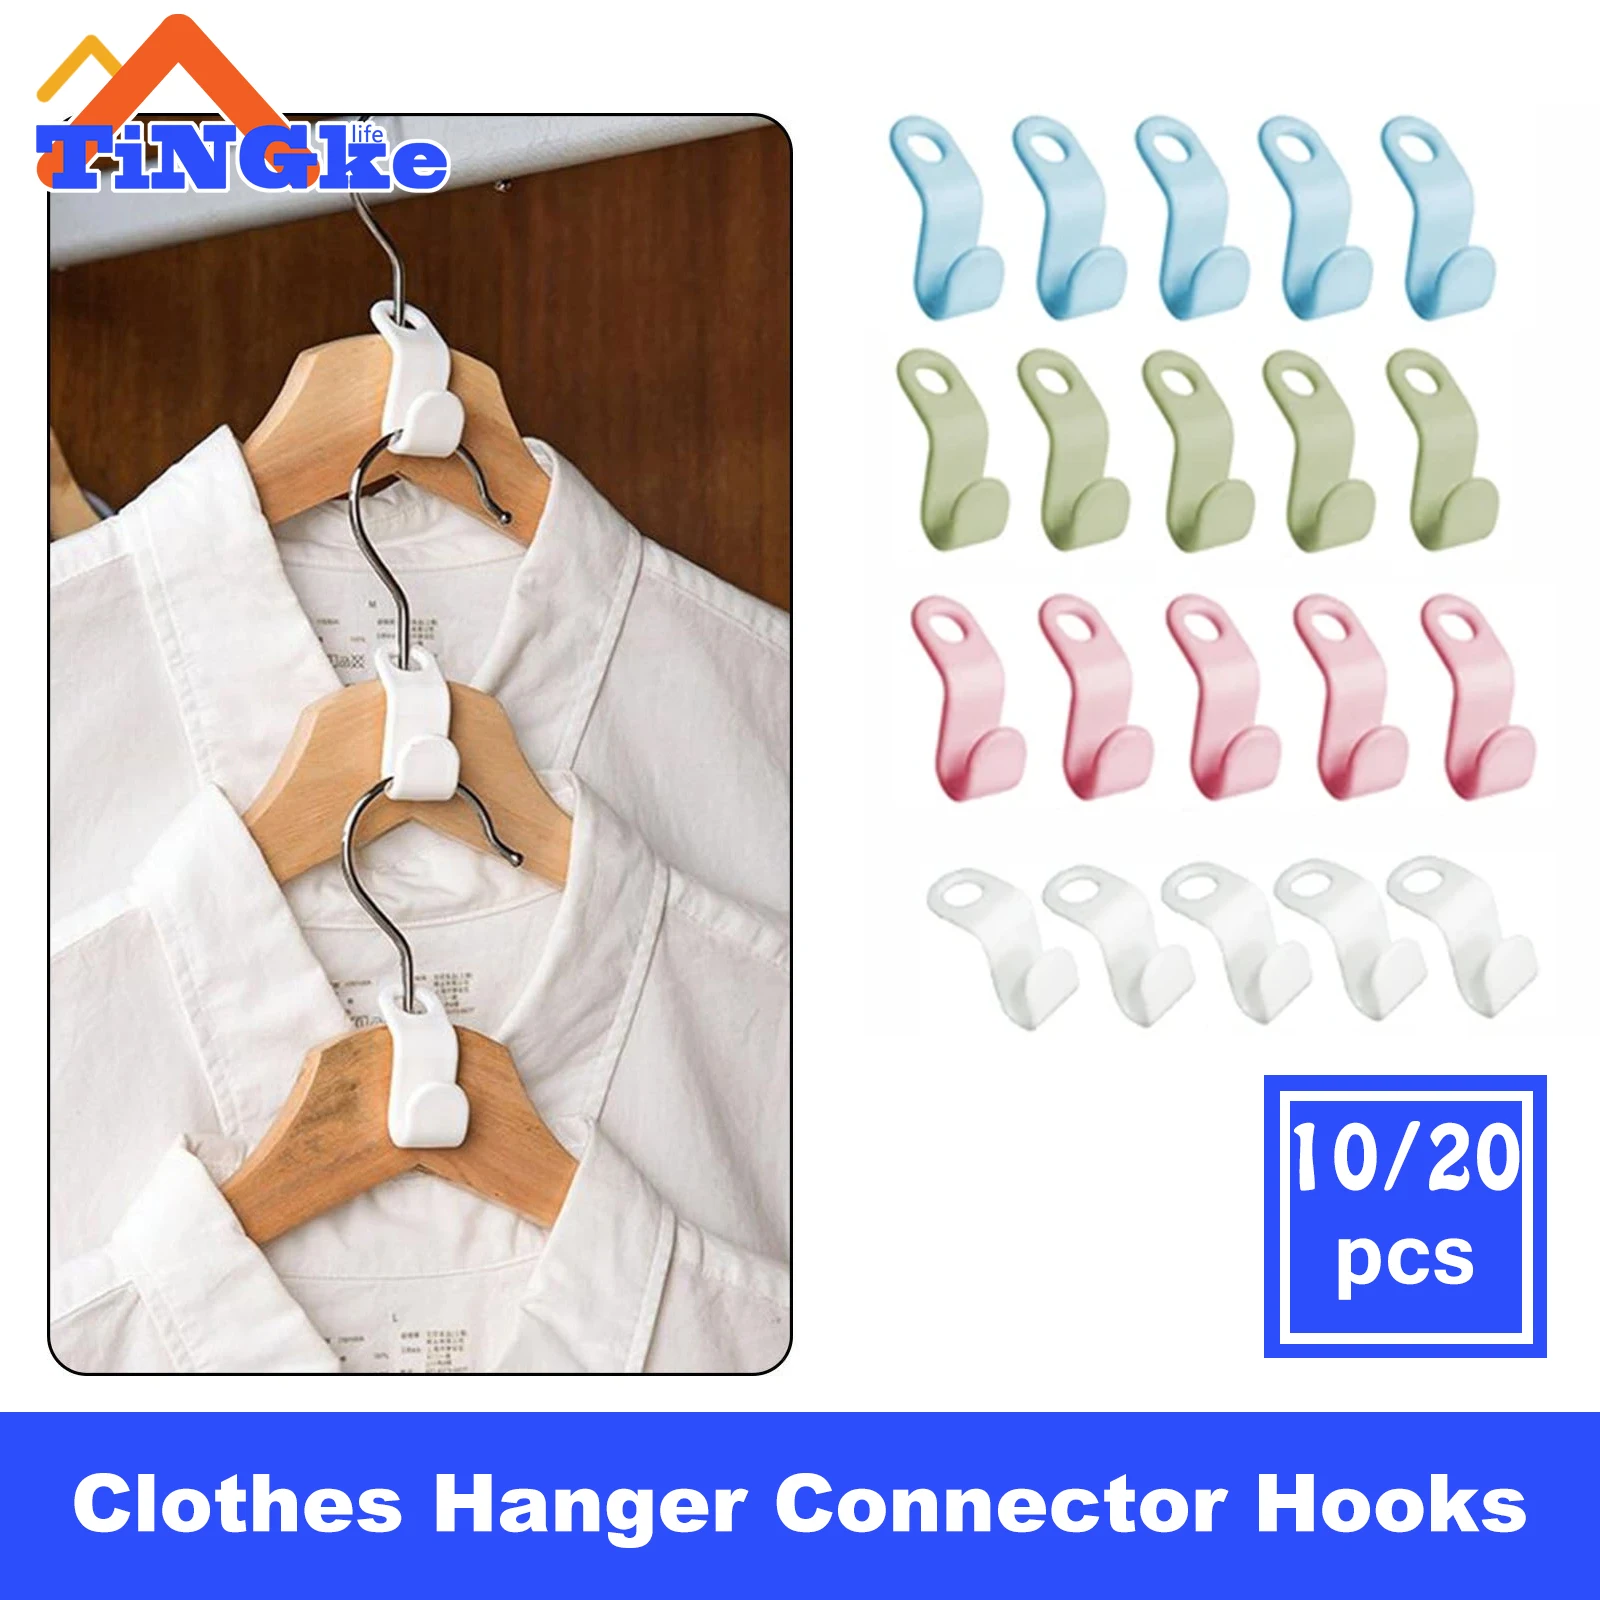 

10/20 Pcs Mini Clothes Hanger Connector Hooks Heavy Duty Cascading Organizer Holder Closet Wardrobe Space Saving Extender Clips